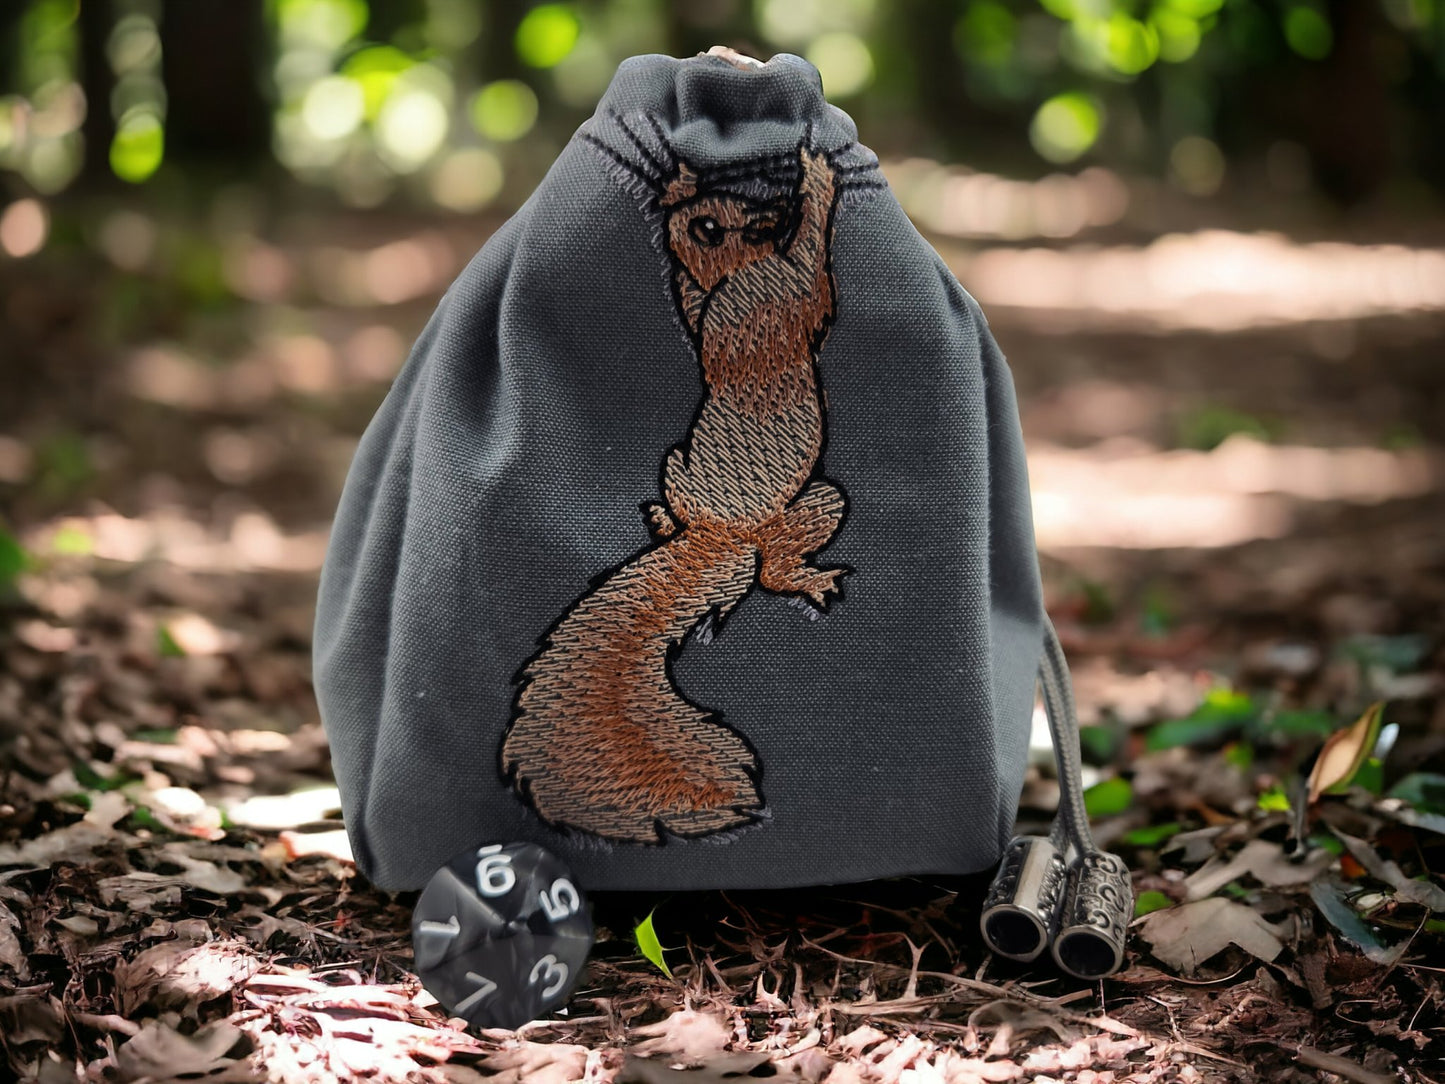 Clinging squirrel dice bag - Rowan Gate